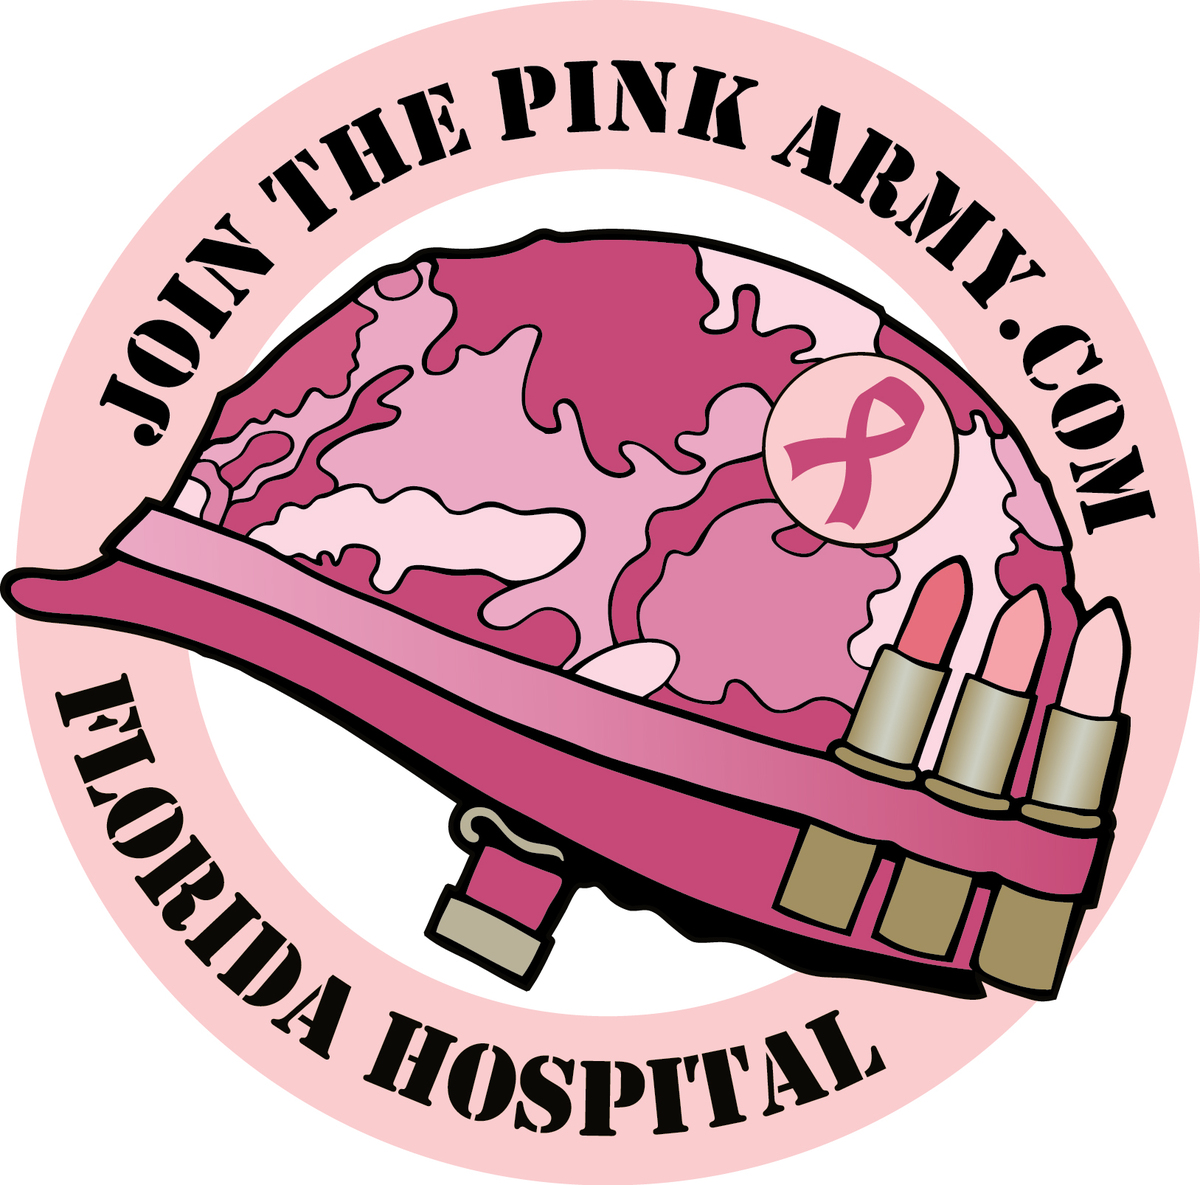 Florida Hospital Pink Army